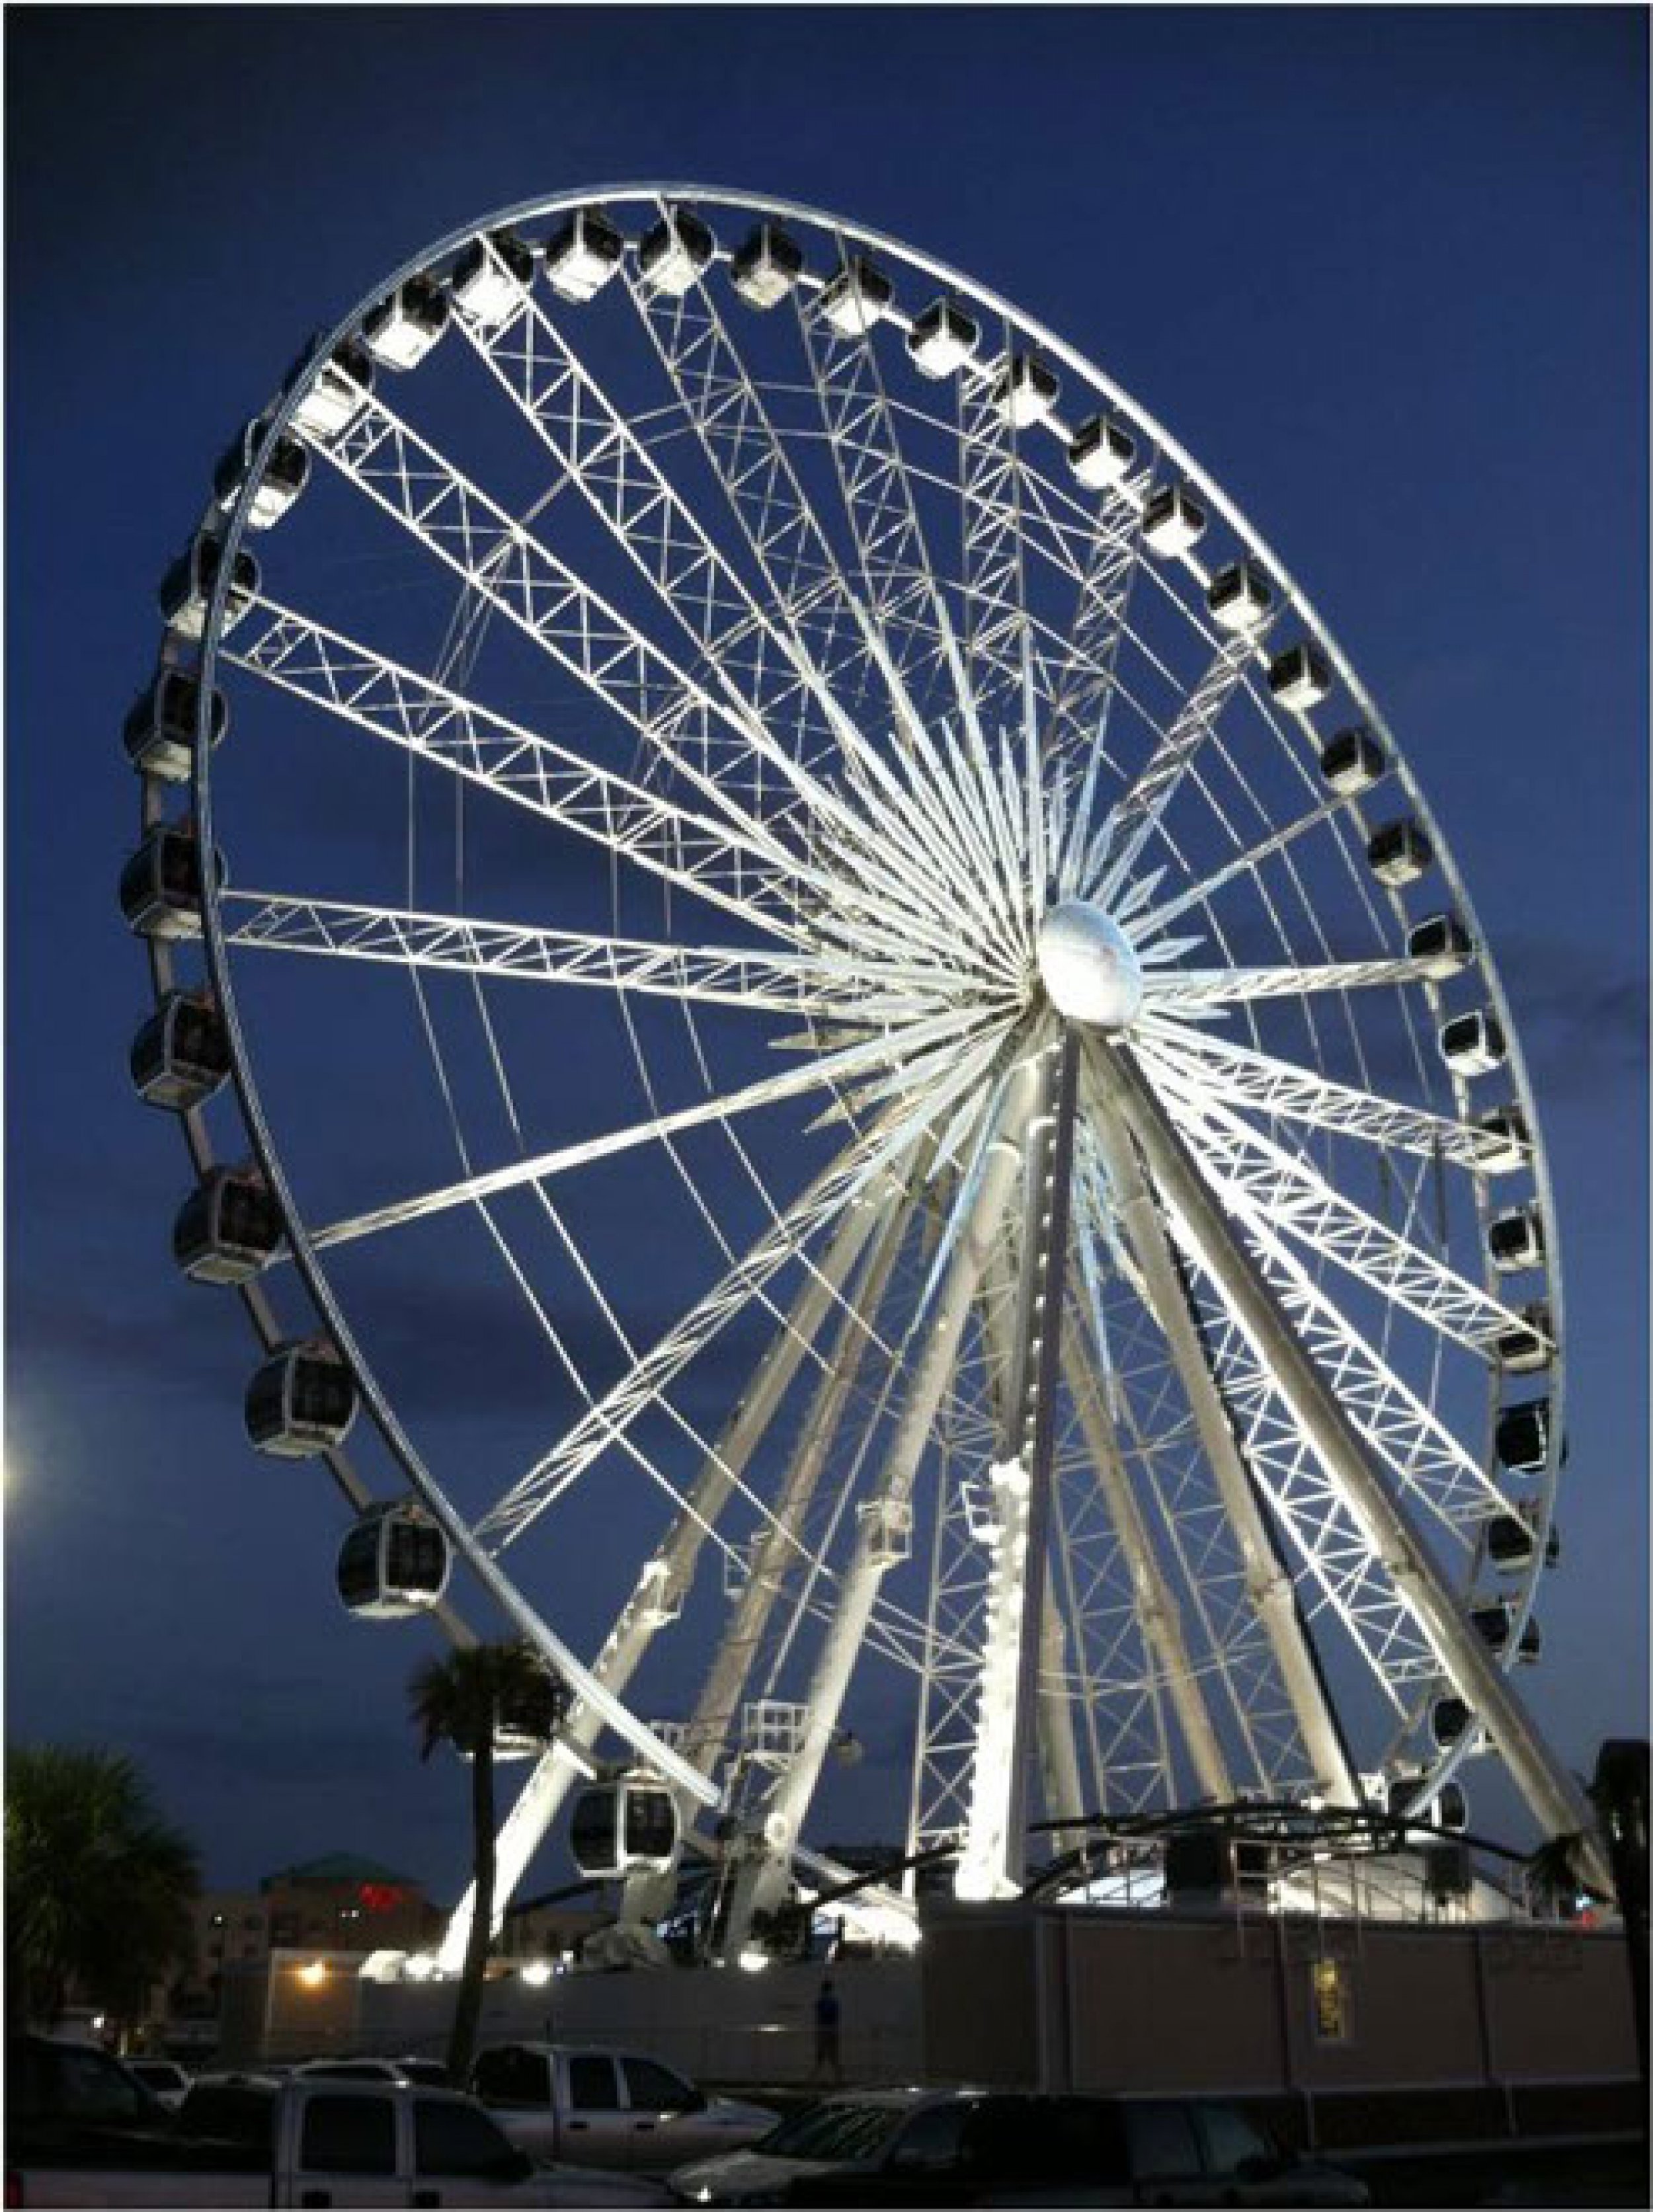 Skyview Atlanta 200 Foot Ferris Wheel Opens In Atlanta